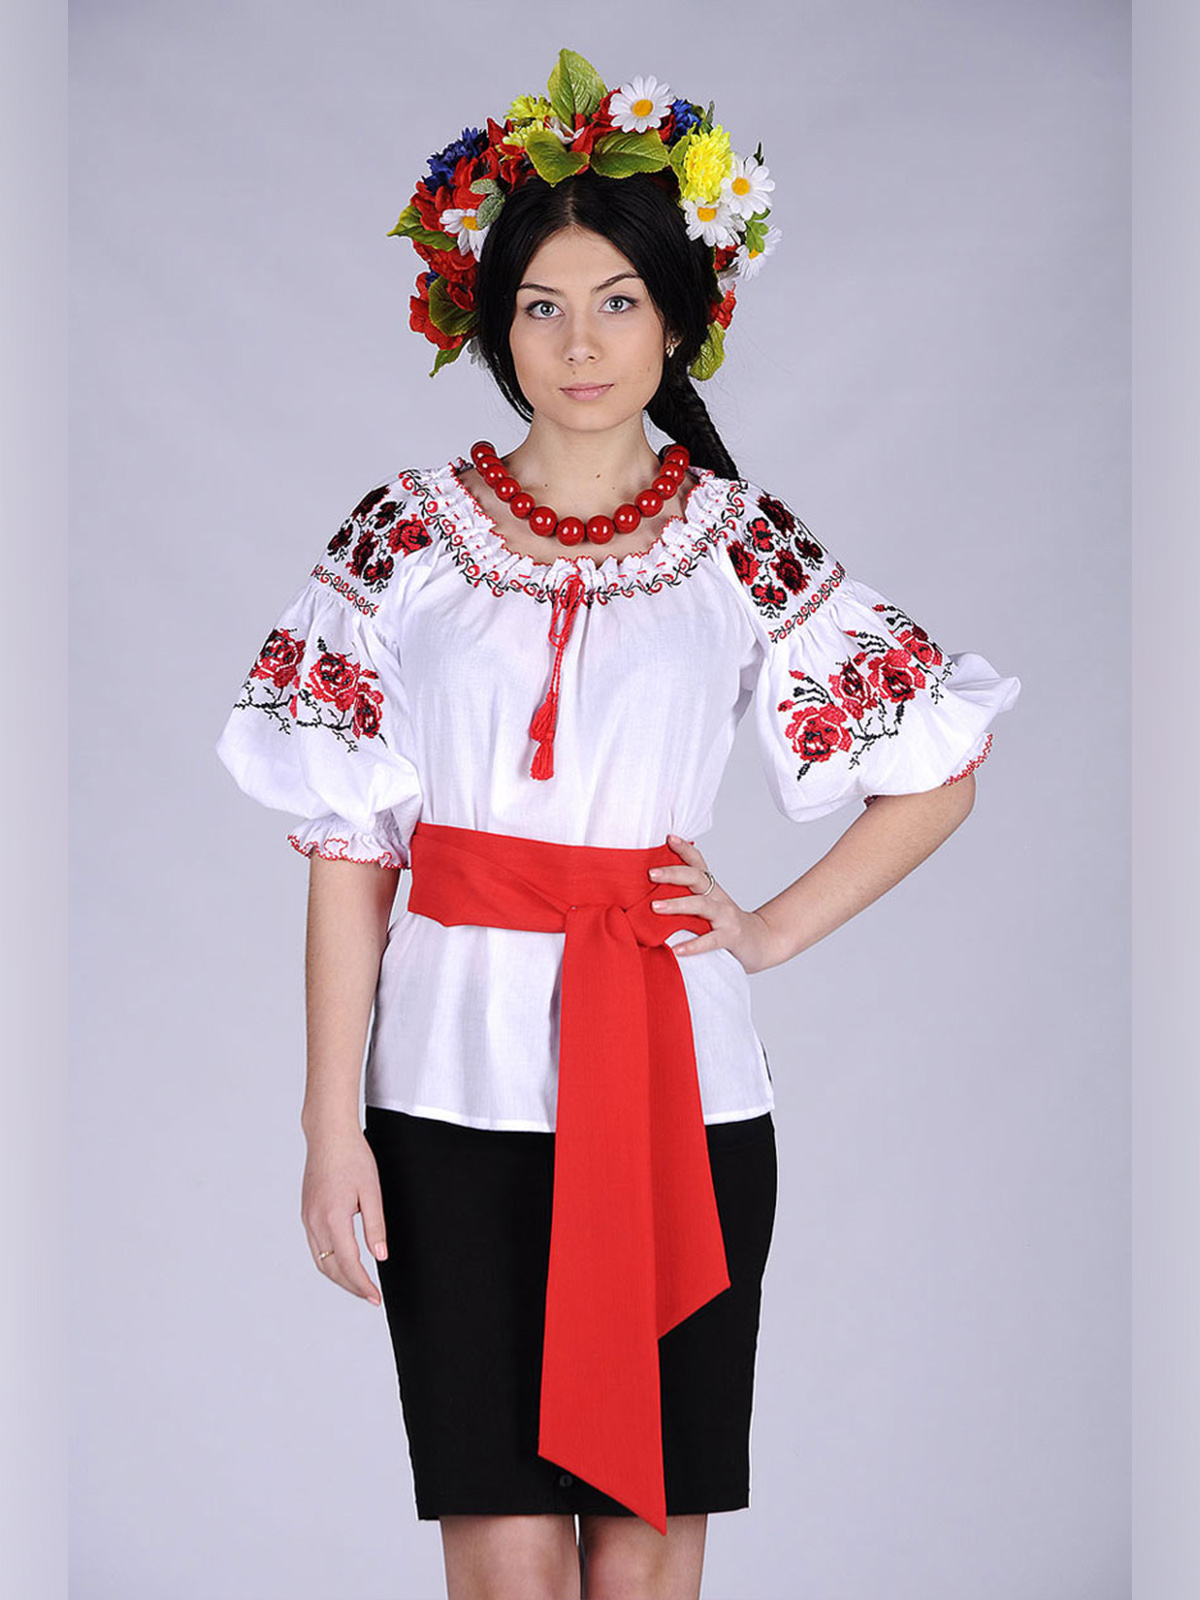 E costume. Украинский национальный костюм. Украинский костюм женский. Украинское платье. Украинский народный костюм.